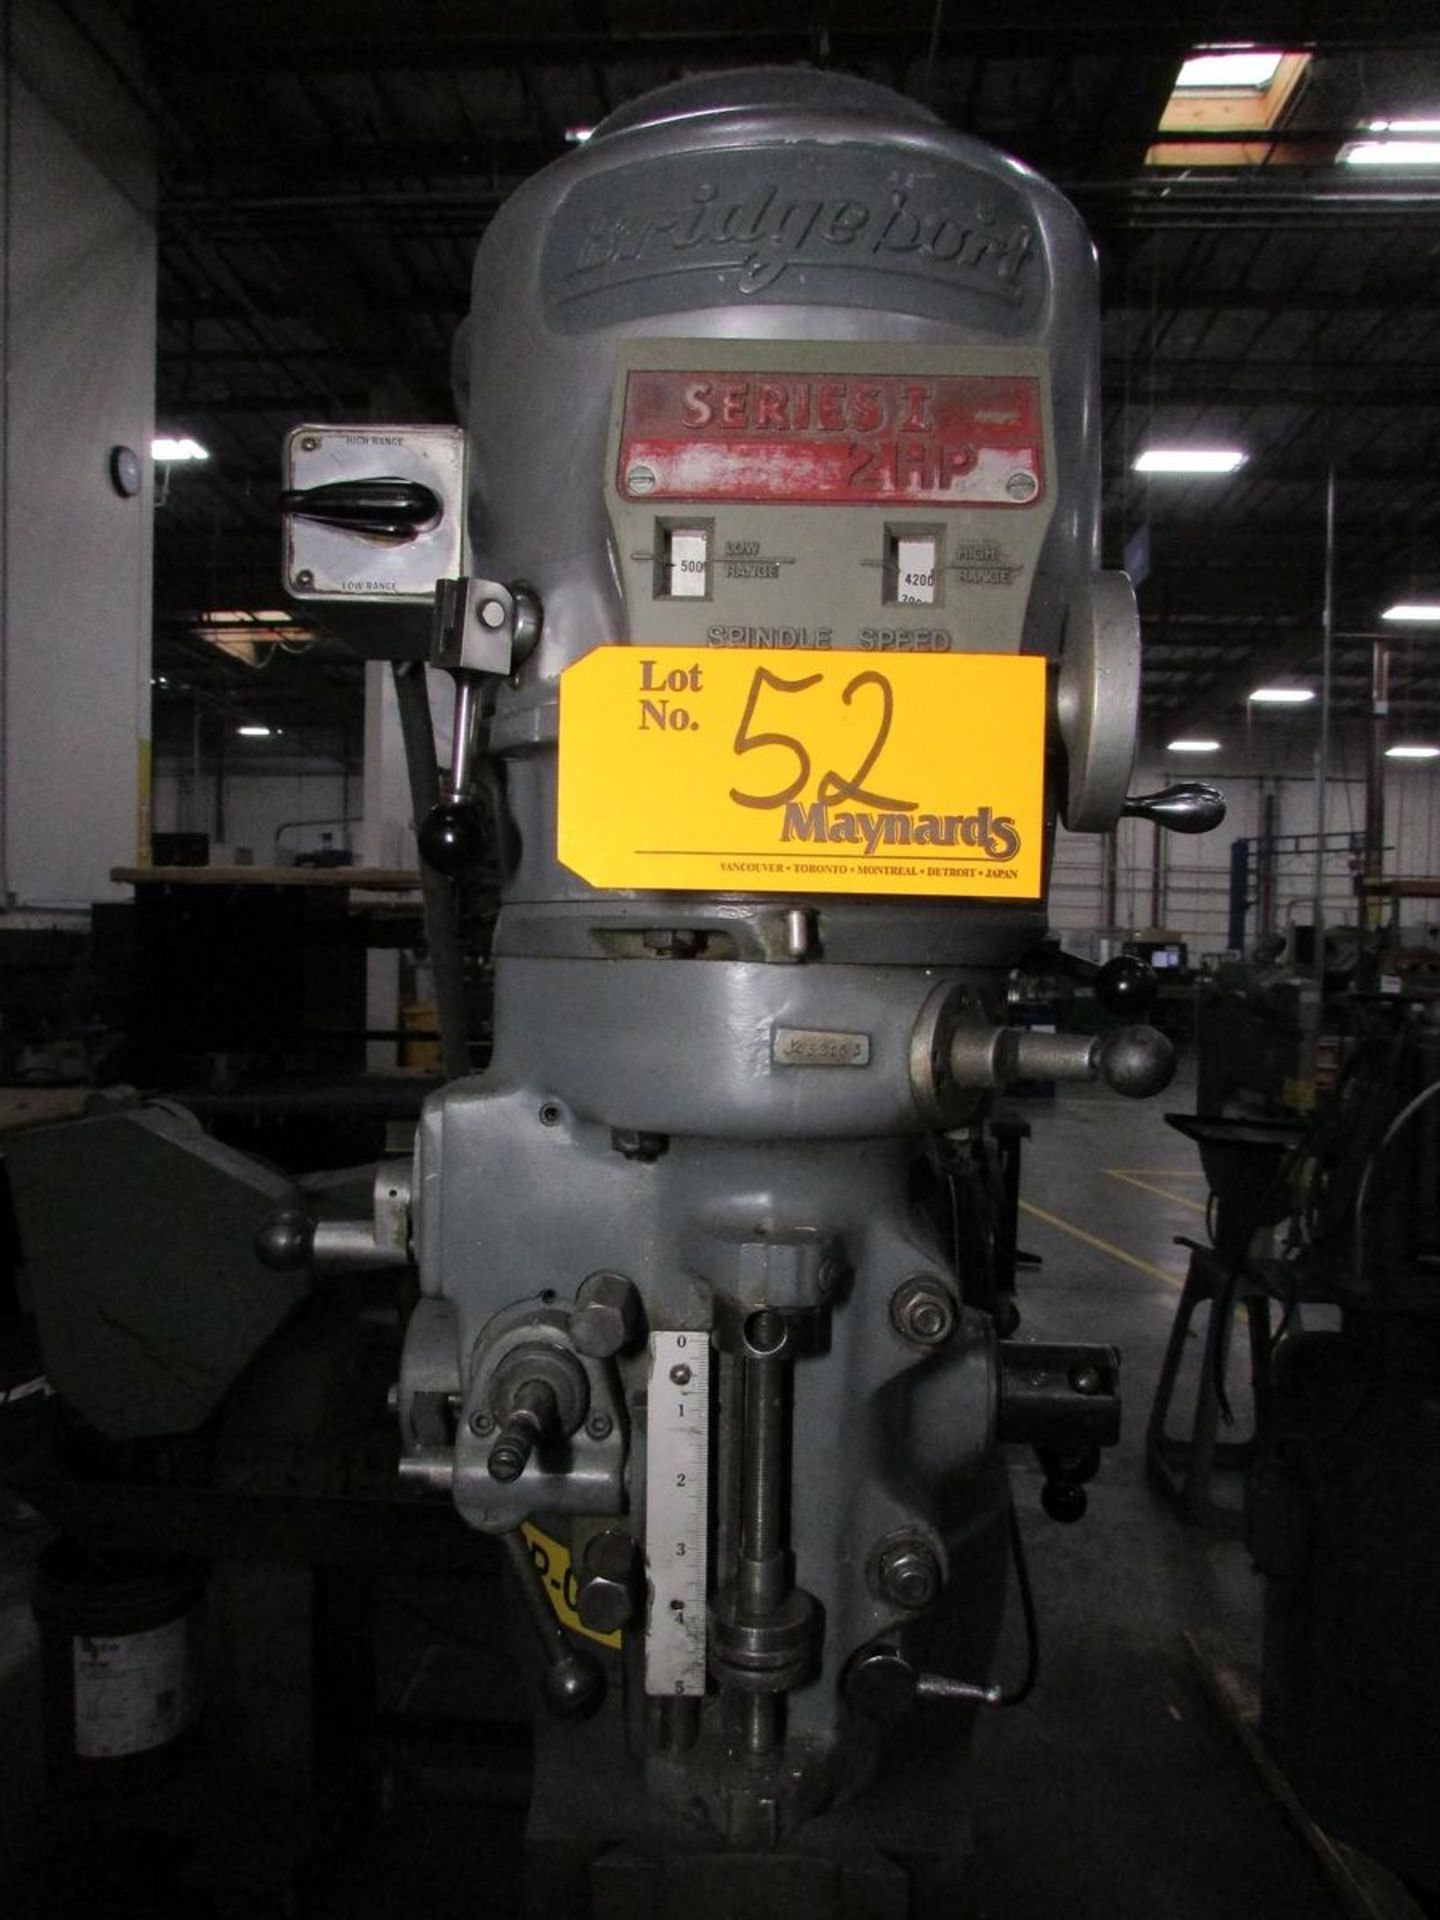 Bridgeport Series 1 Vertical Milling Machine - Image 10 of 14